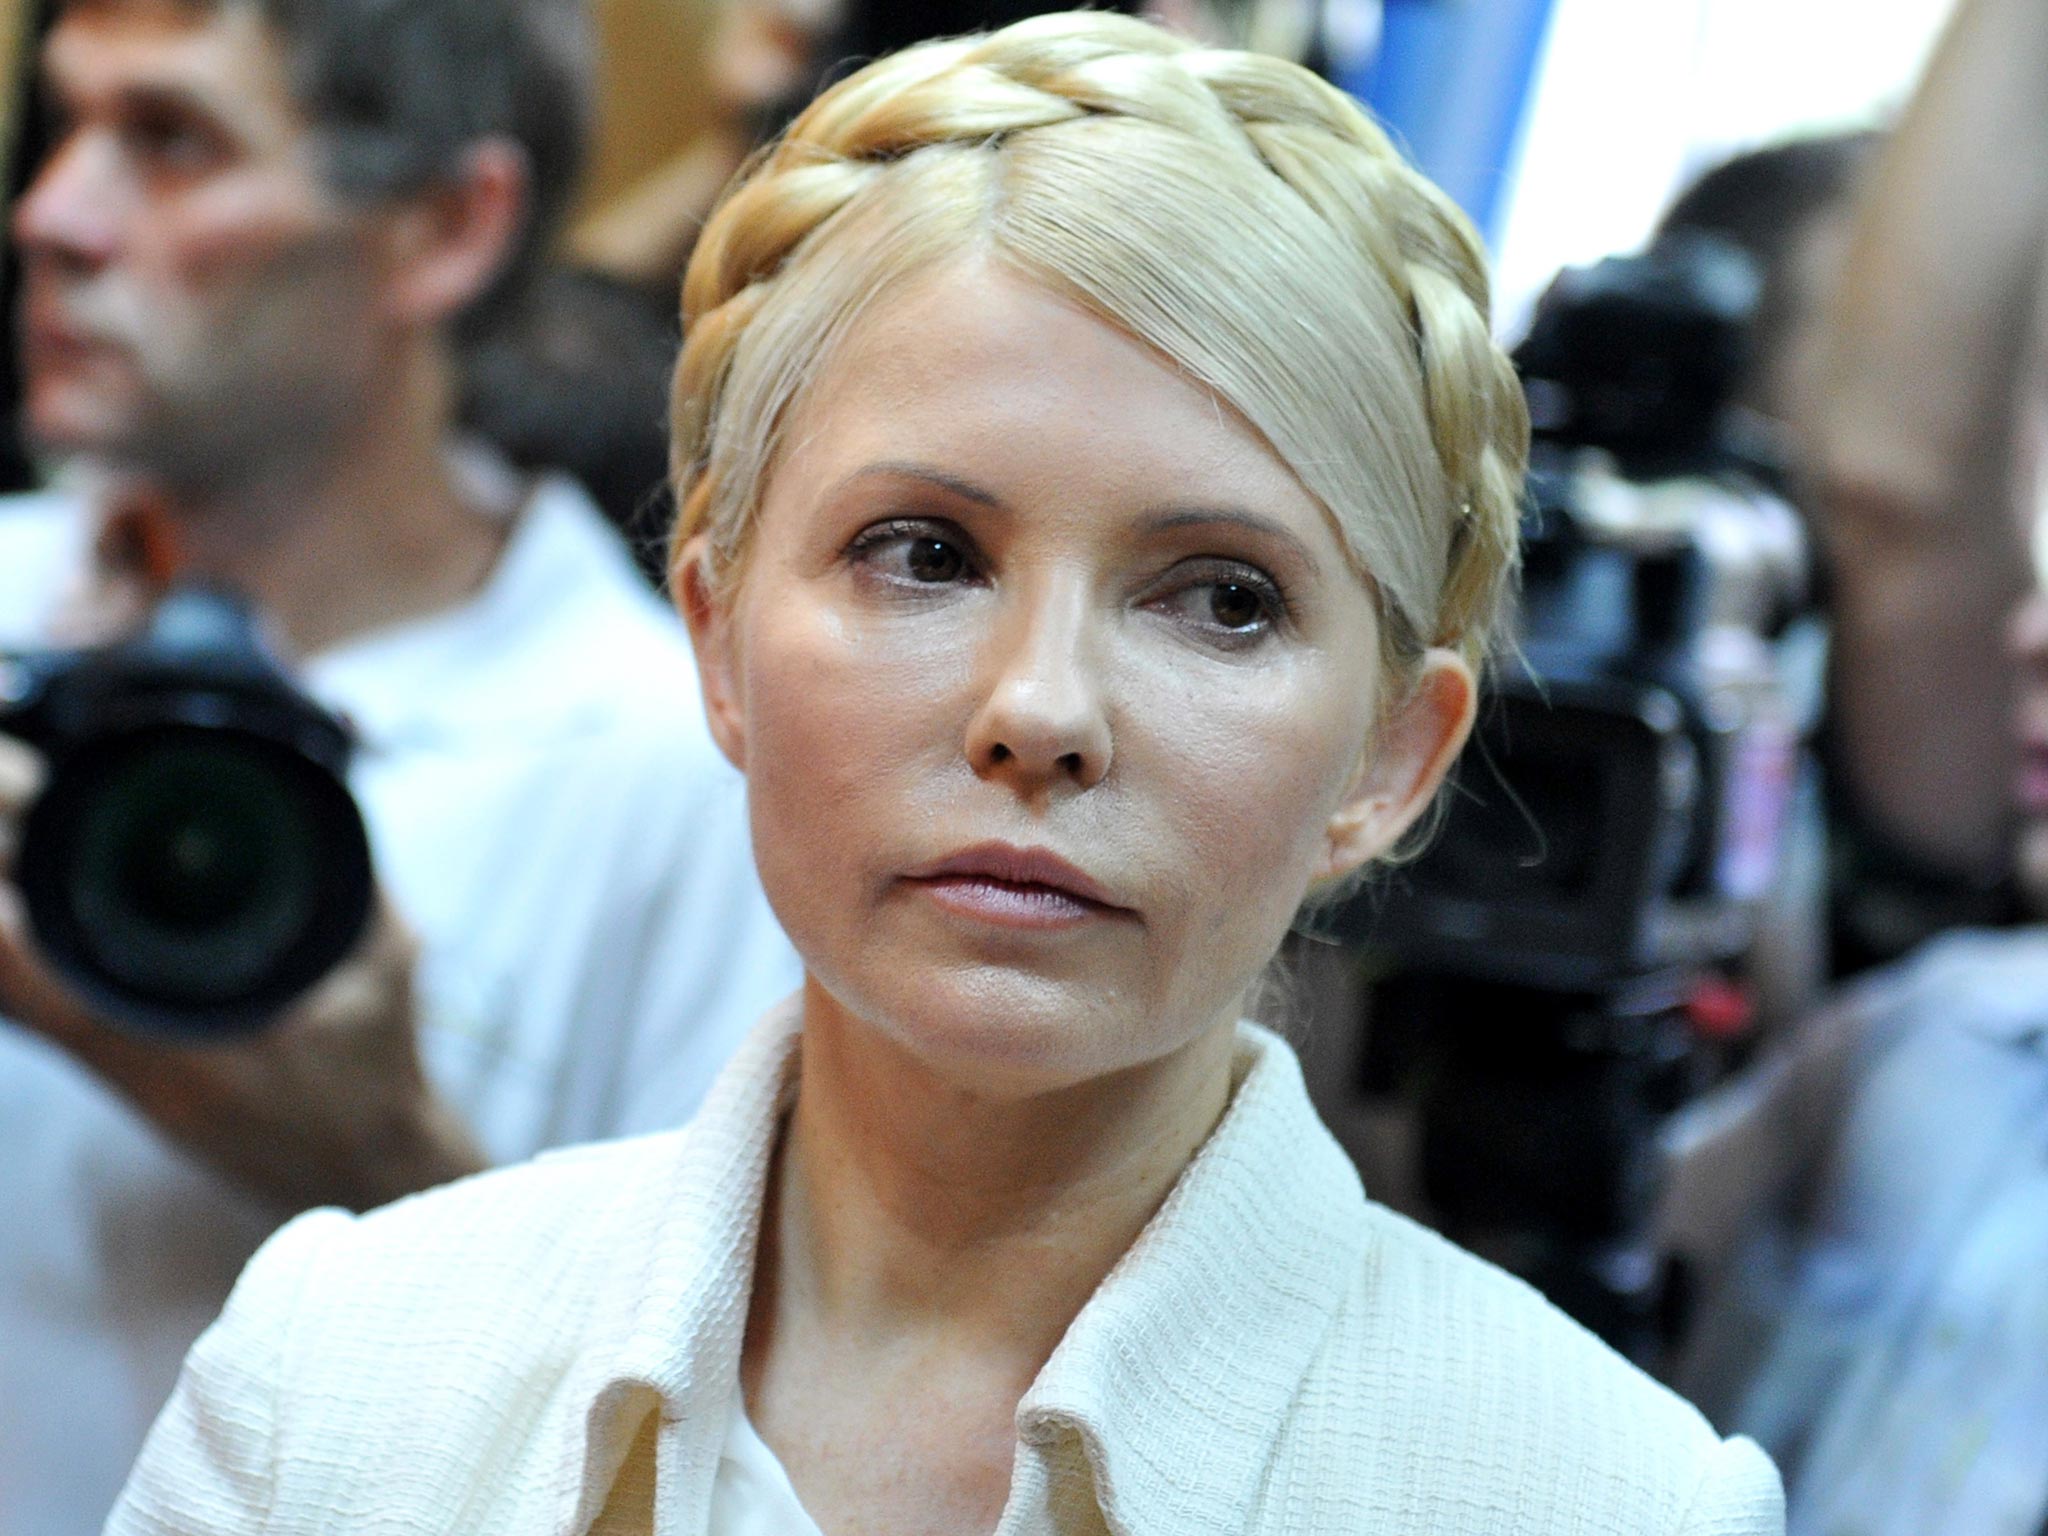 Ukraine's Parliament voted to release former prime minister Yulia Tymoshenko